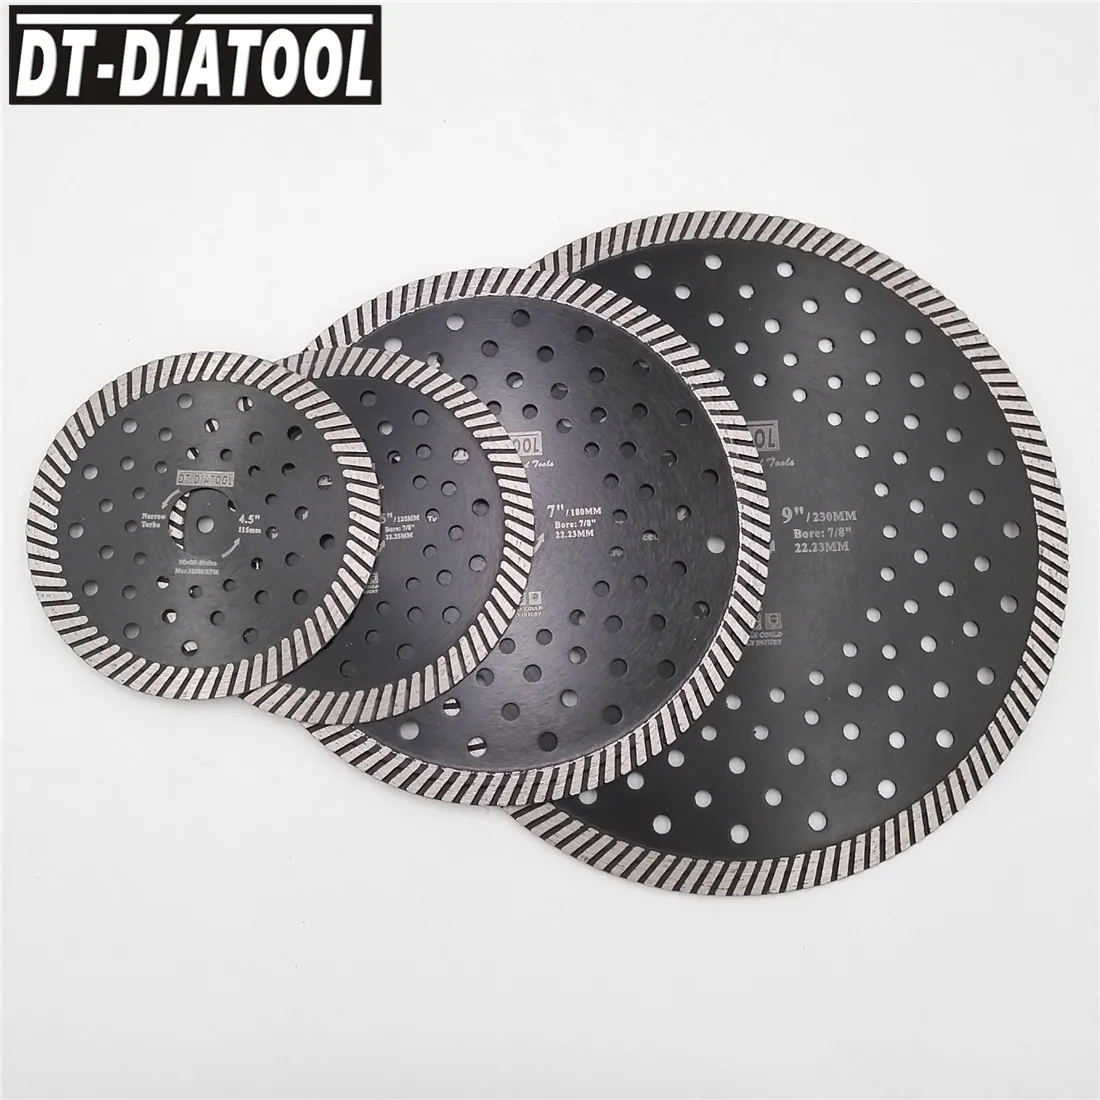 

DT-DIATOOL 1pc Diamond Concrete Narrow Turbo Blade With Multi Holes Cutting Disc for Granite Marble Masonry